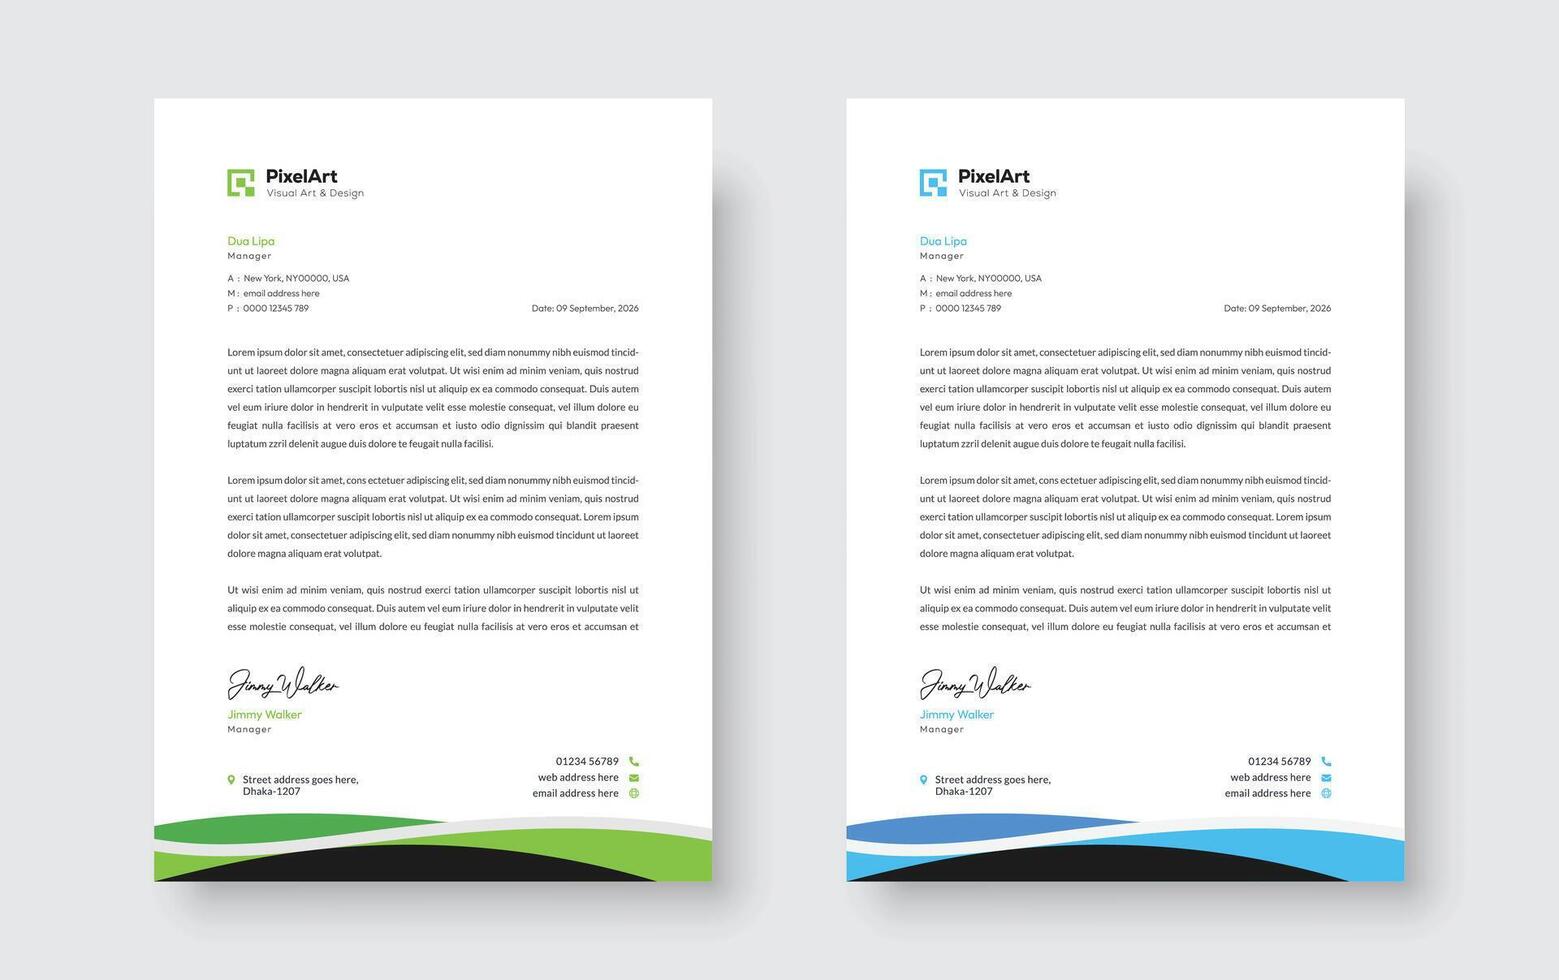 Corporate modern letterhead design, creative modern letter head design template vector